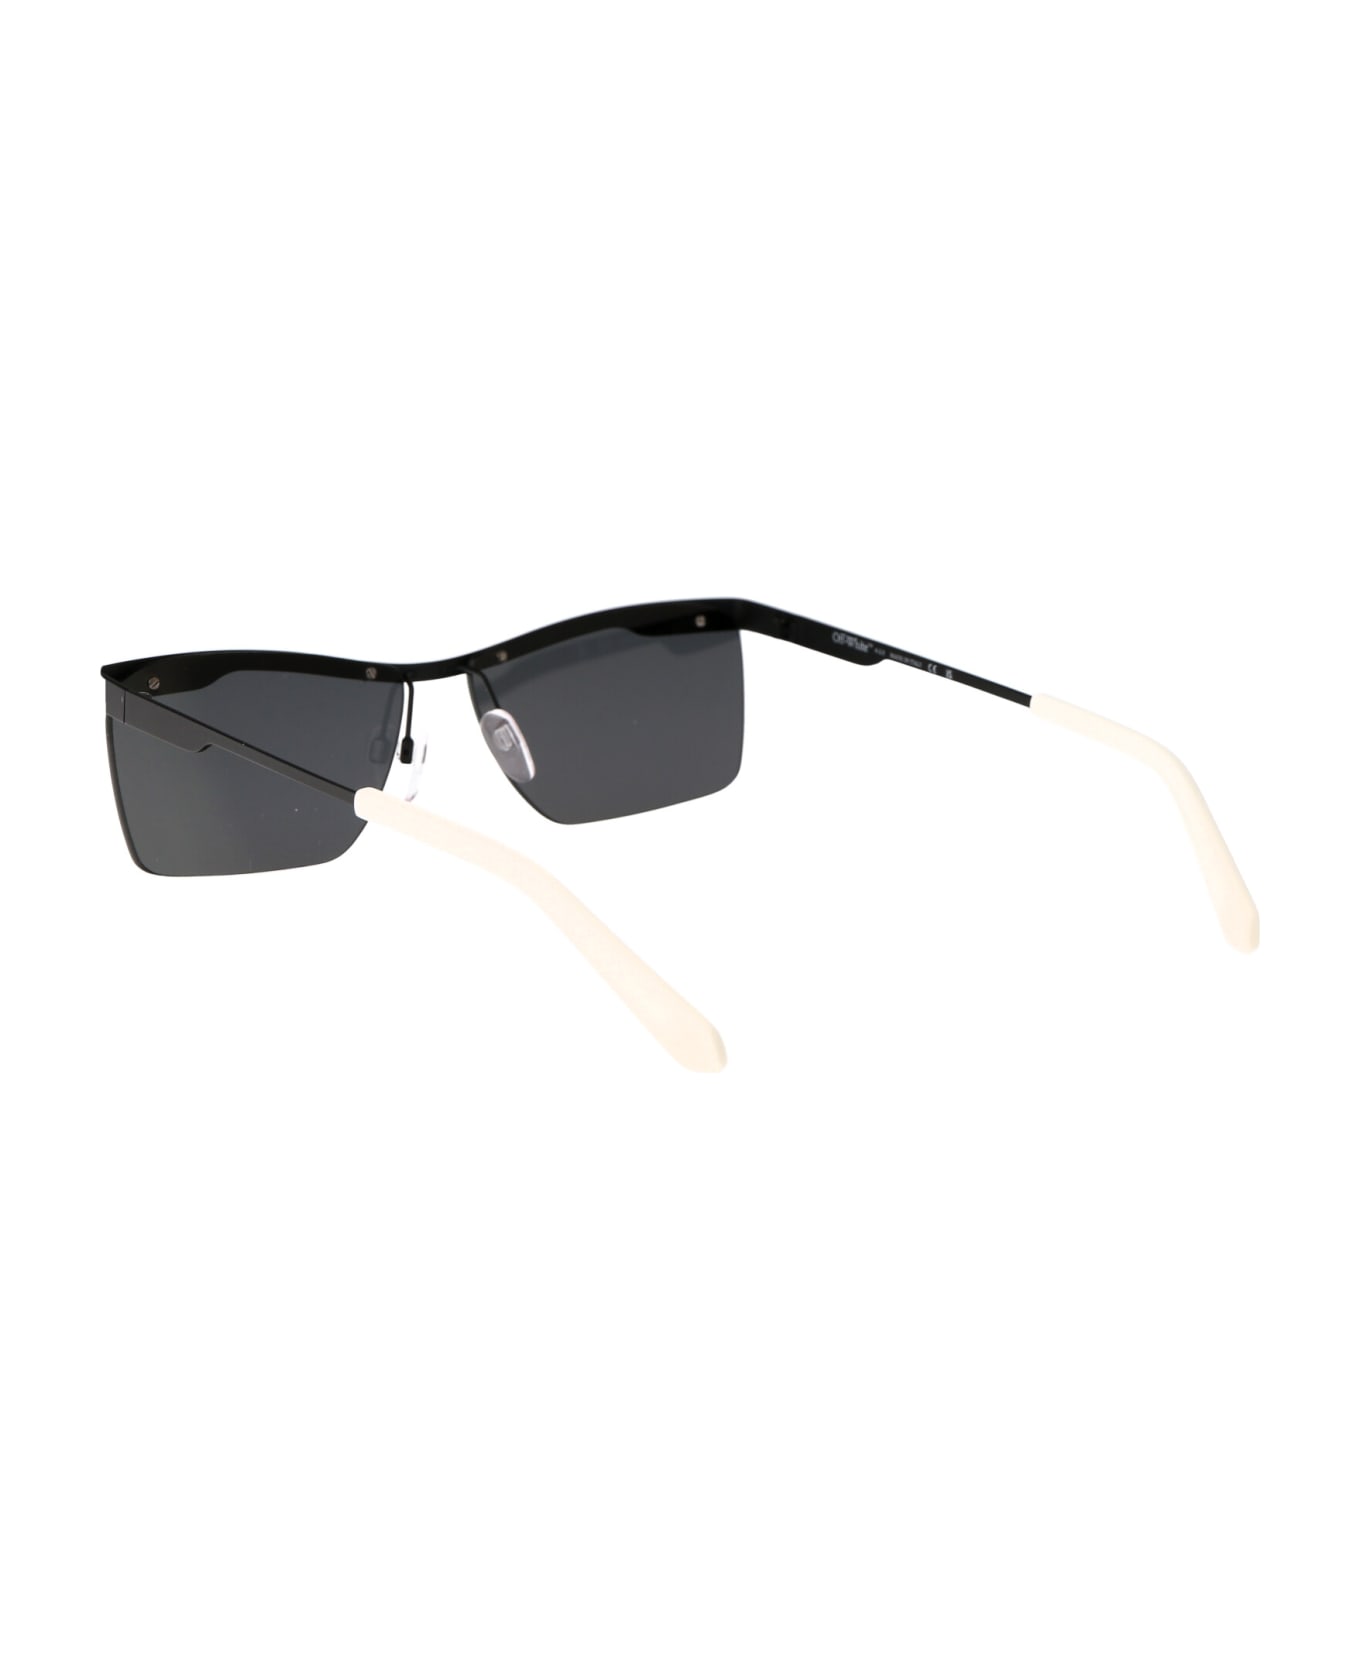 Off-White Rimini Sunglasses - 1007 BLACK